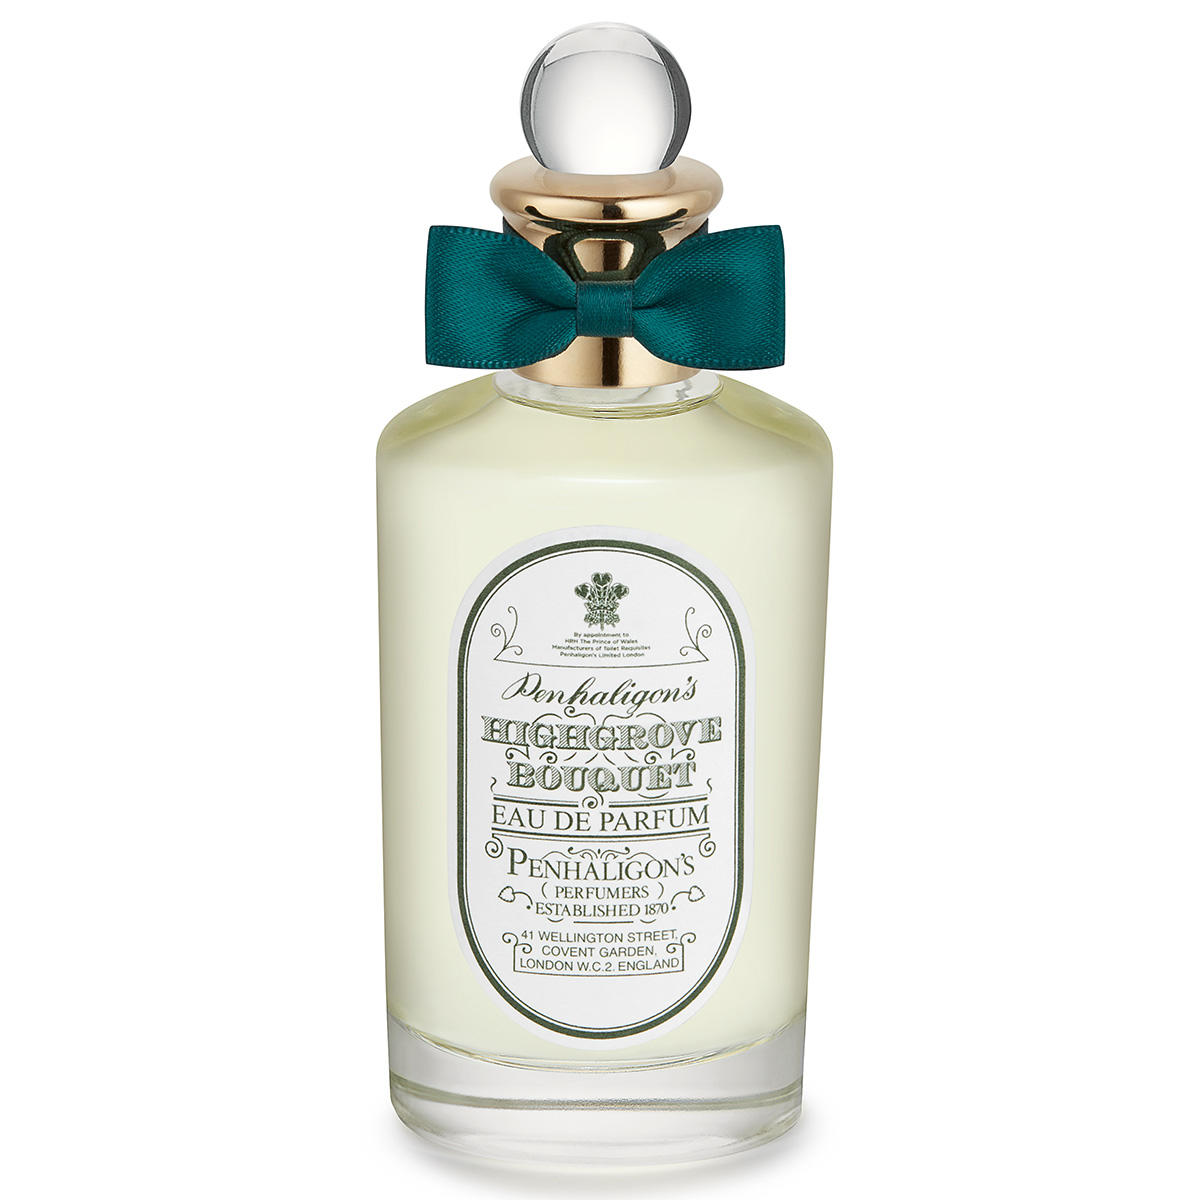 PENHALIGON'S Highgrove Bouquet Eau de Parfum 100 ml - 1